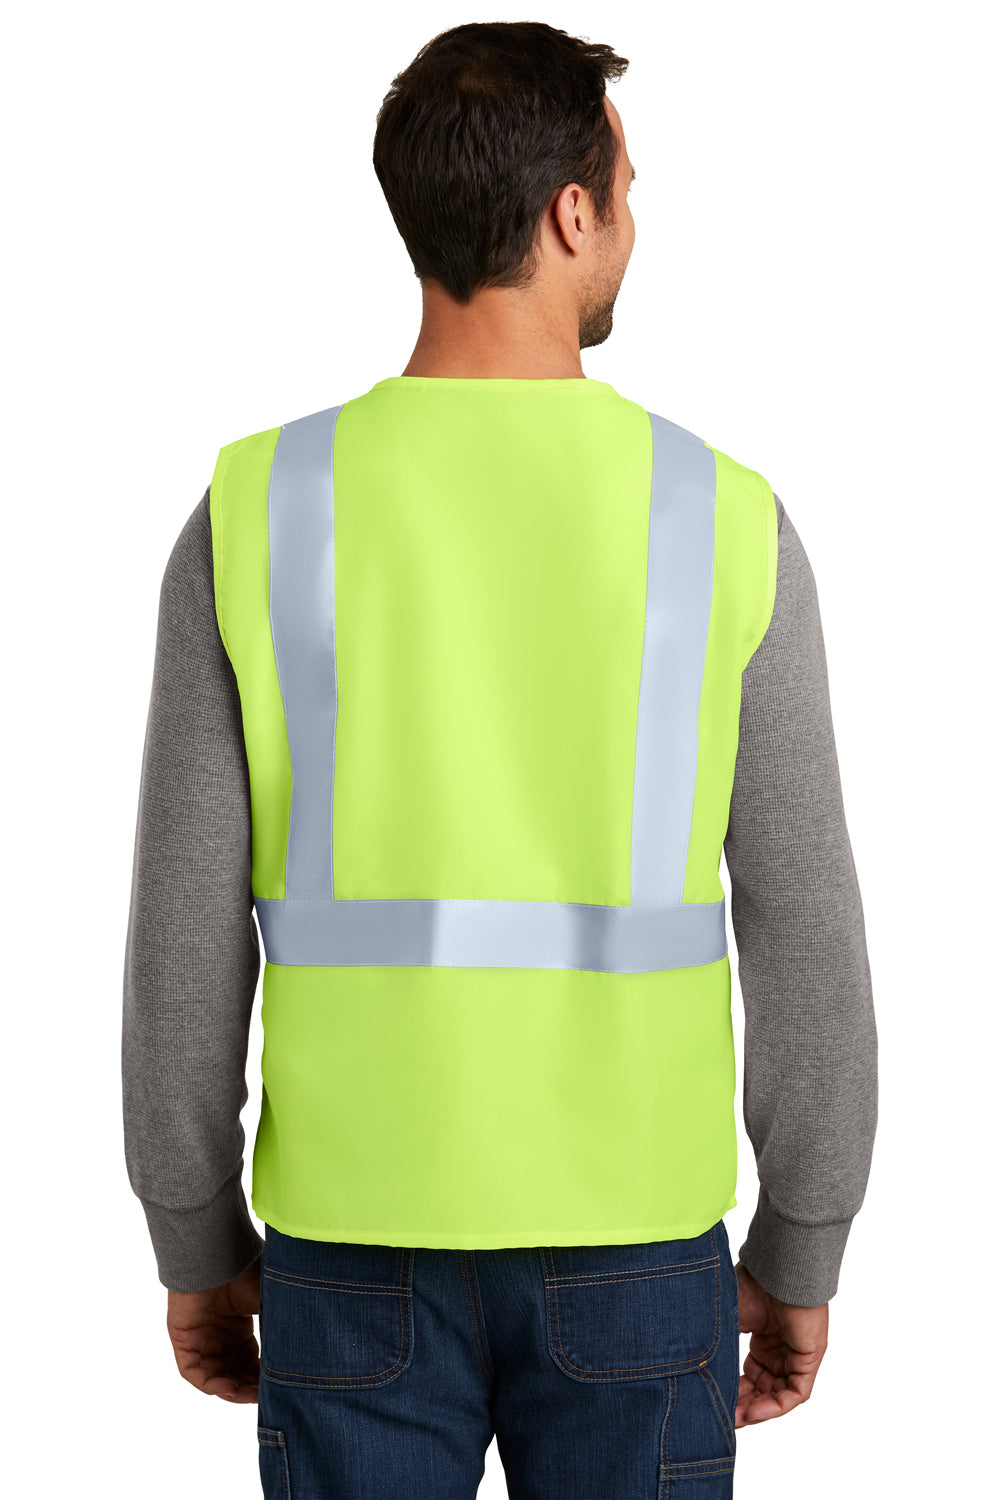 CornerStone CSV400 Enhanced Visibility Safety Vest Safety Yellow Back